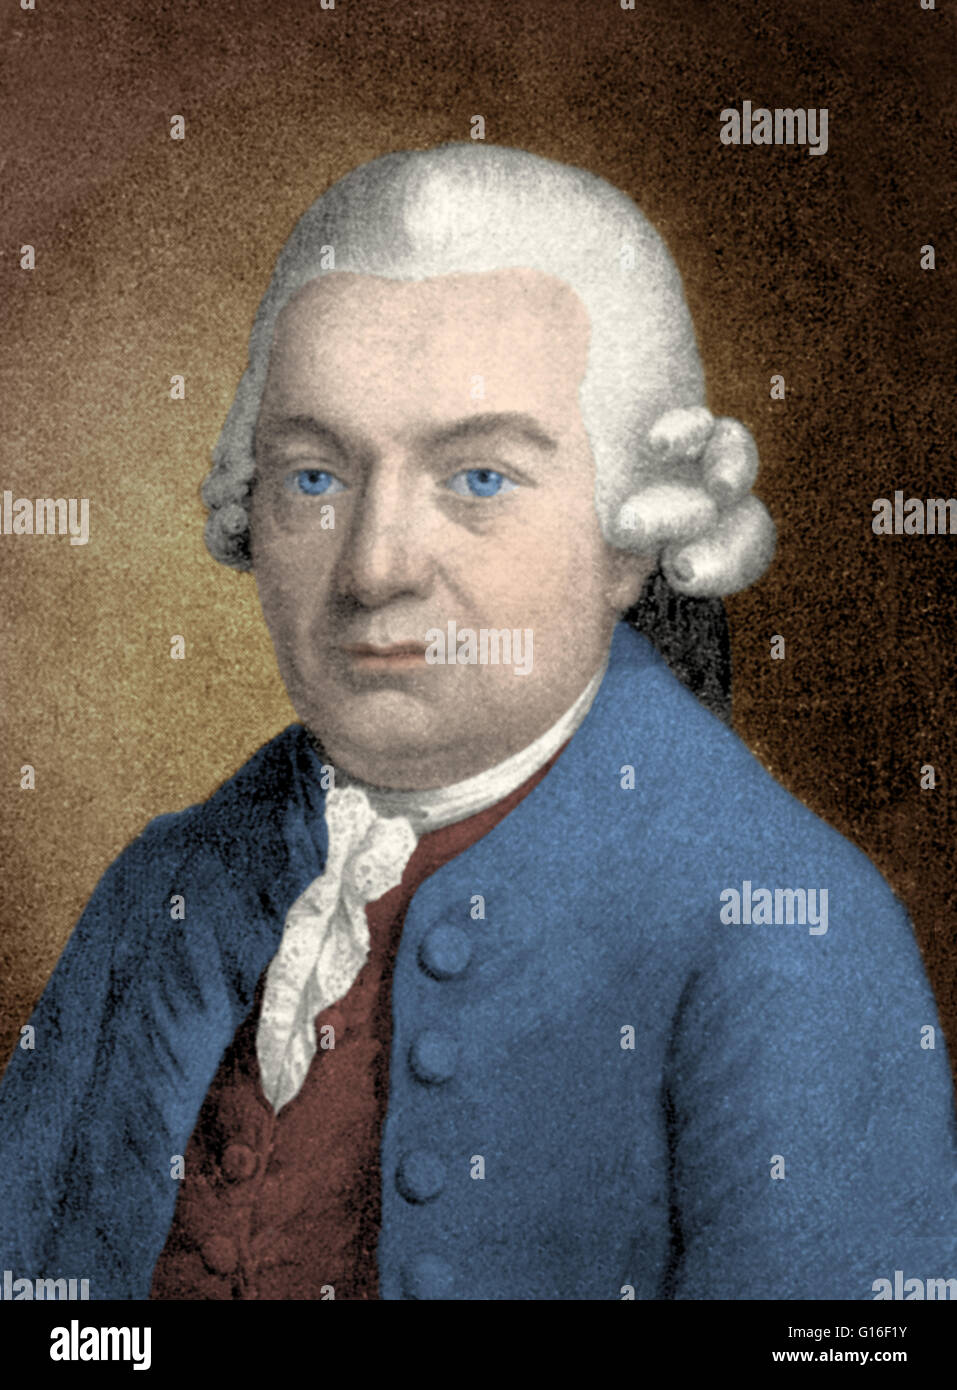 Carl Philipp Emanuel Bach (March 8, 1714 - December 14, 1788) was a German ...